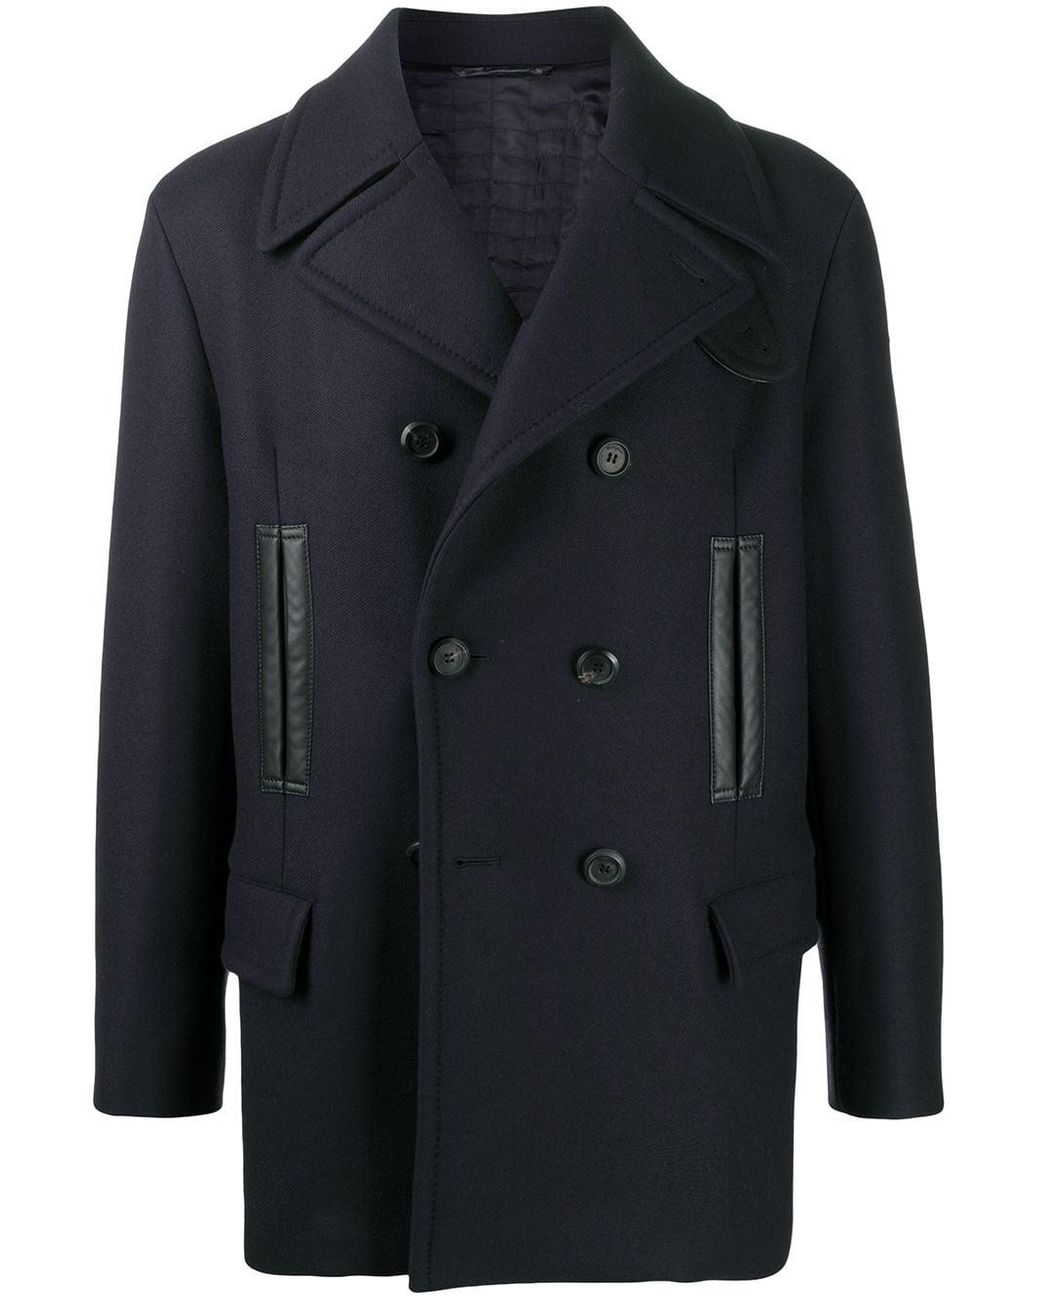 Ferragamo Cashmere Double-breasted Multi-pocket Coat in Blue for Men - Lyst